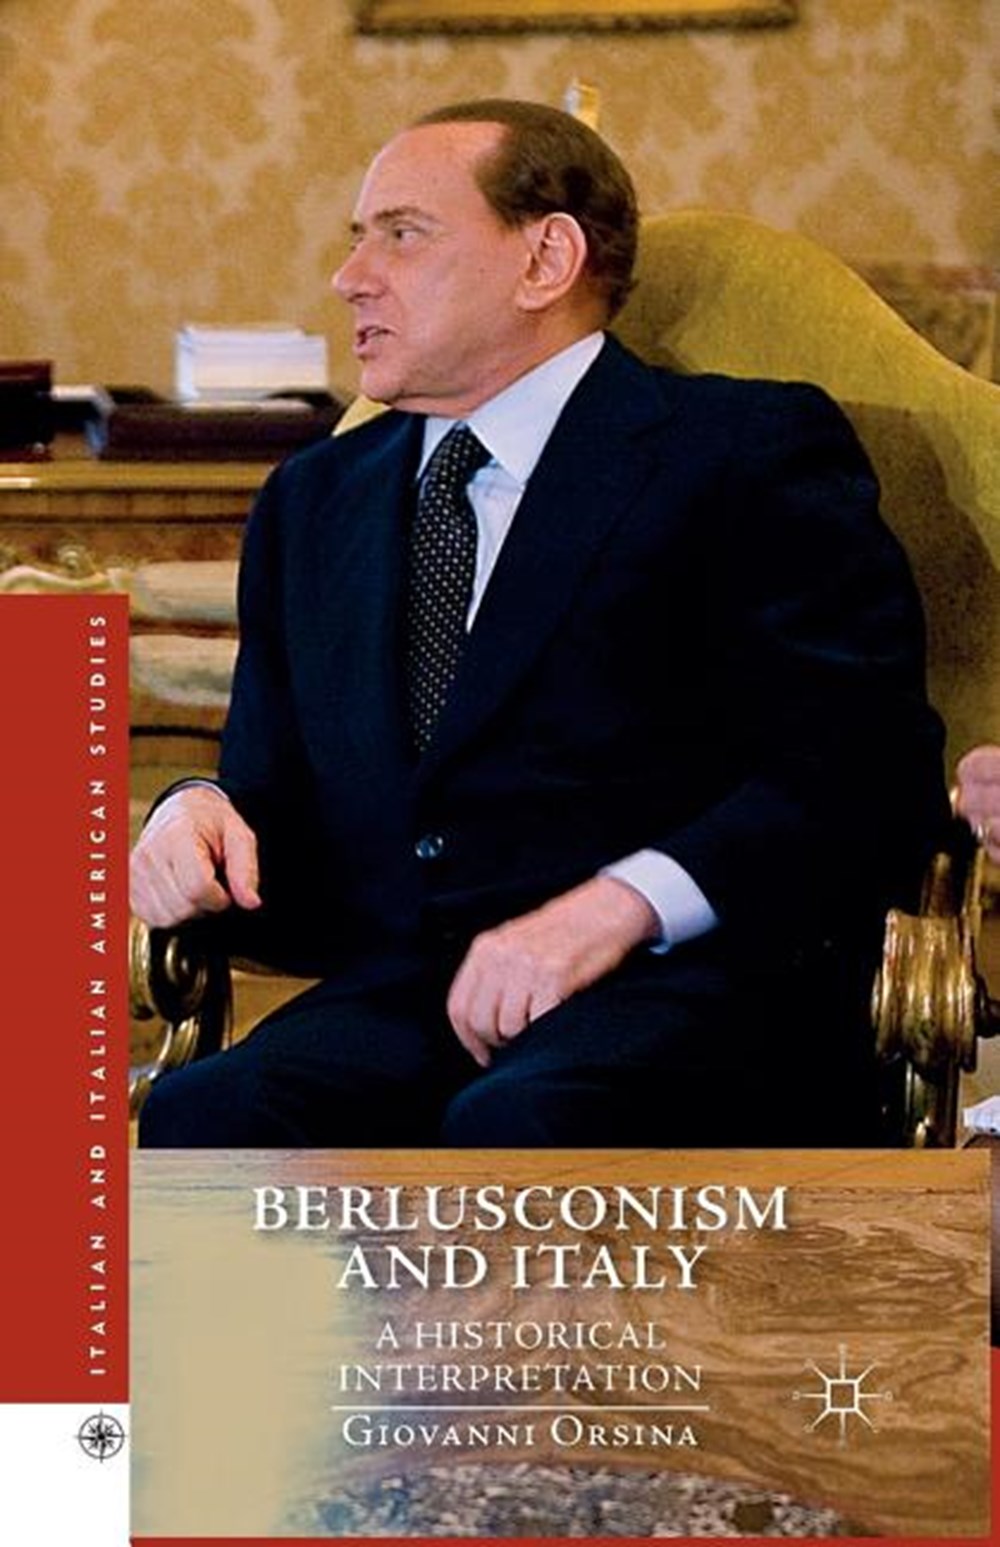 Berlusconism and Italy: A Historical Interpretation (2014)